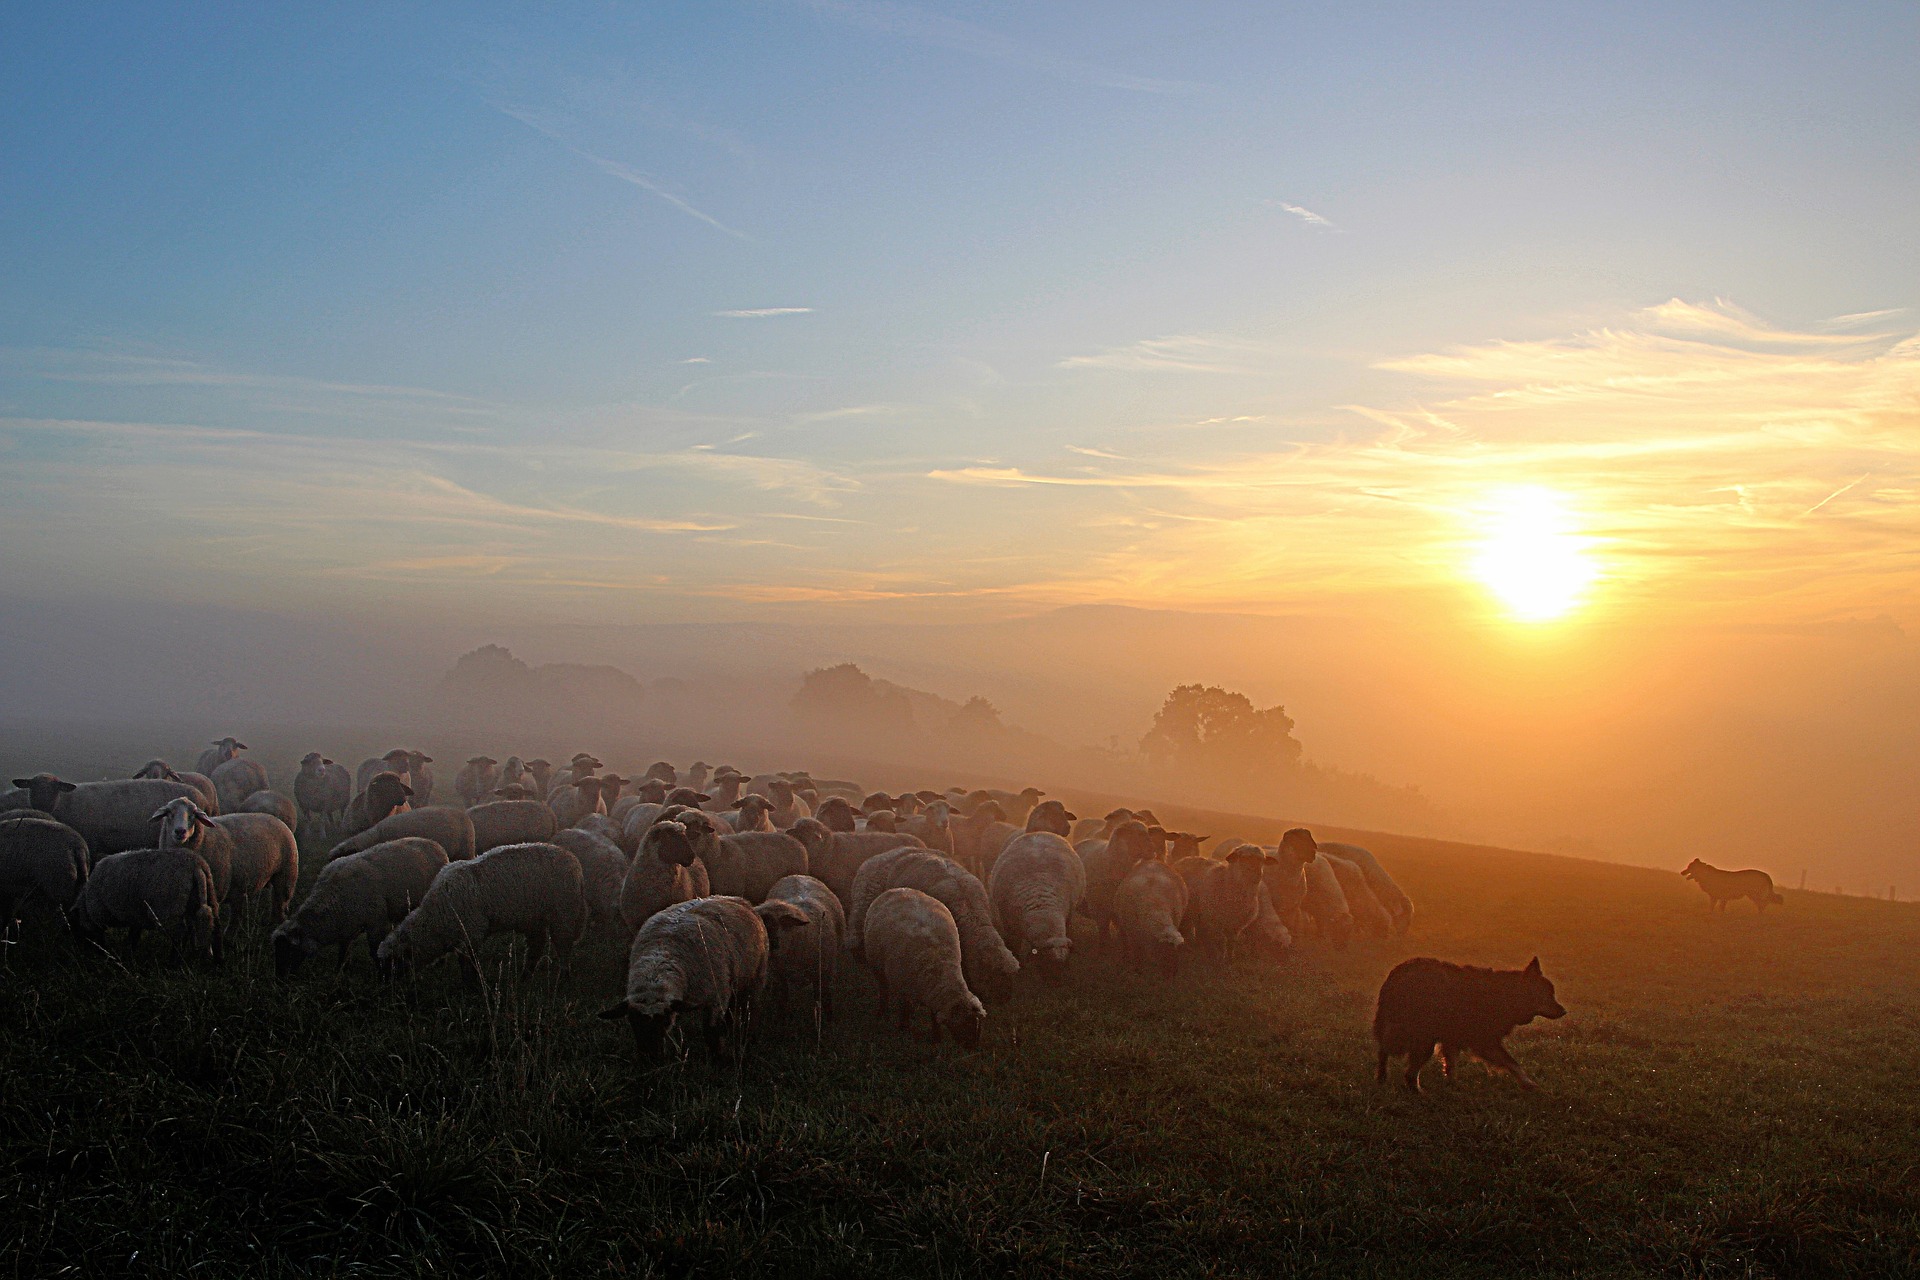 ovce stádo súmrak